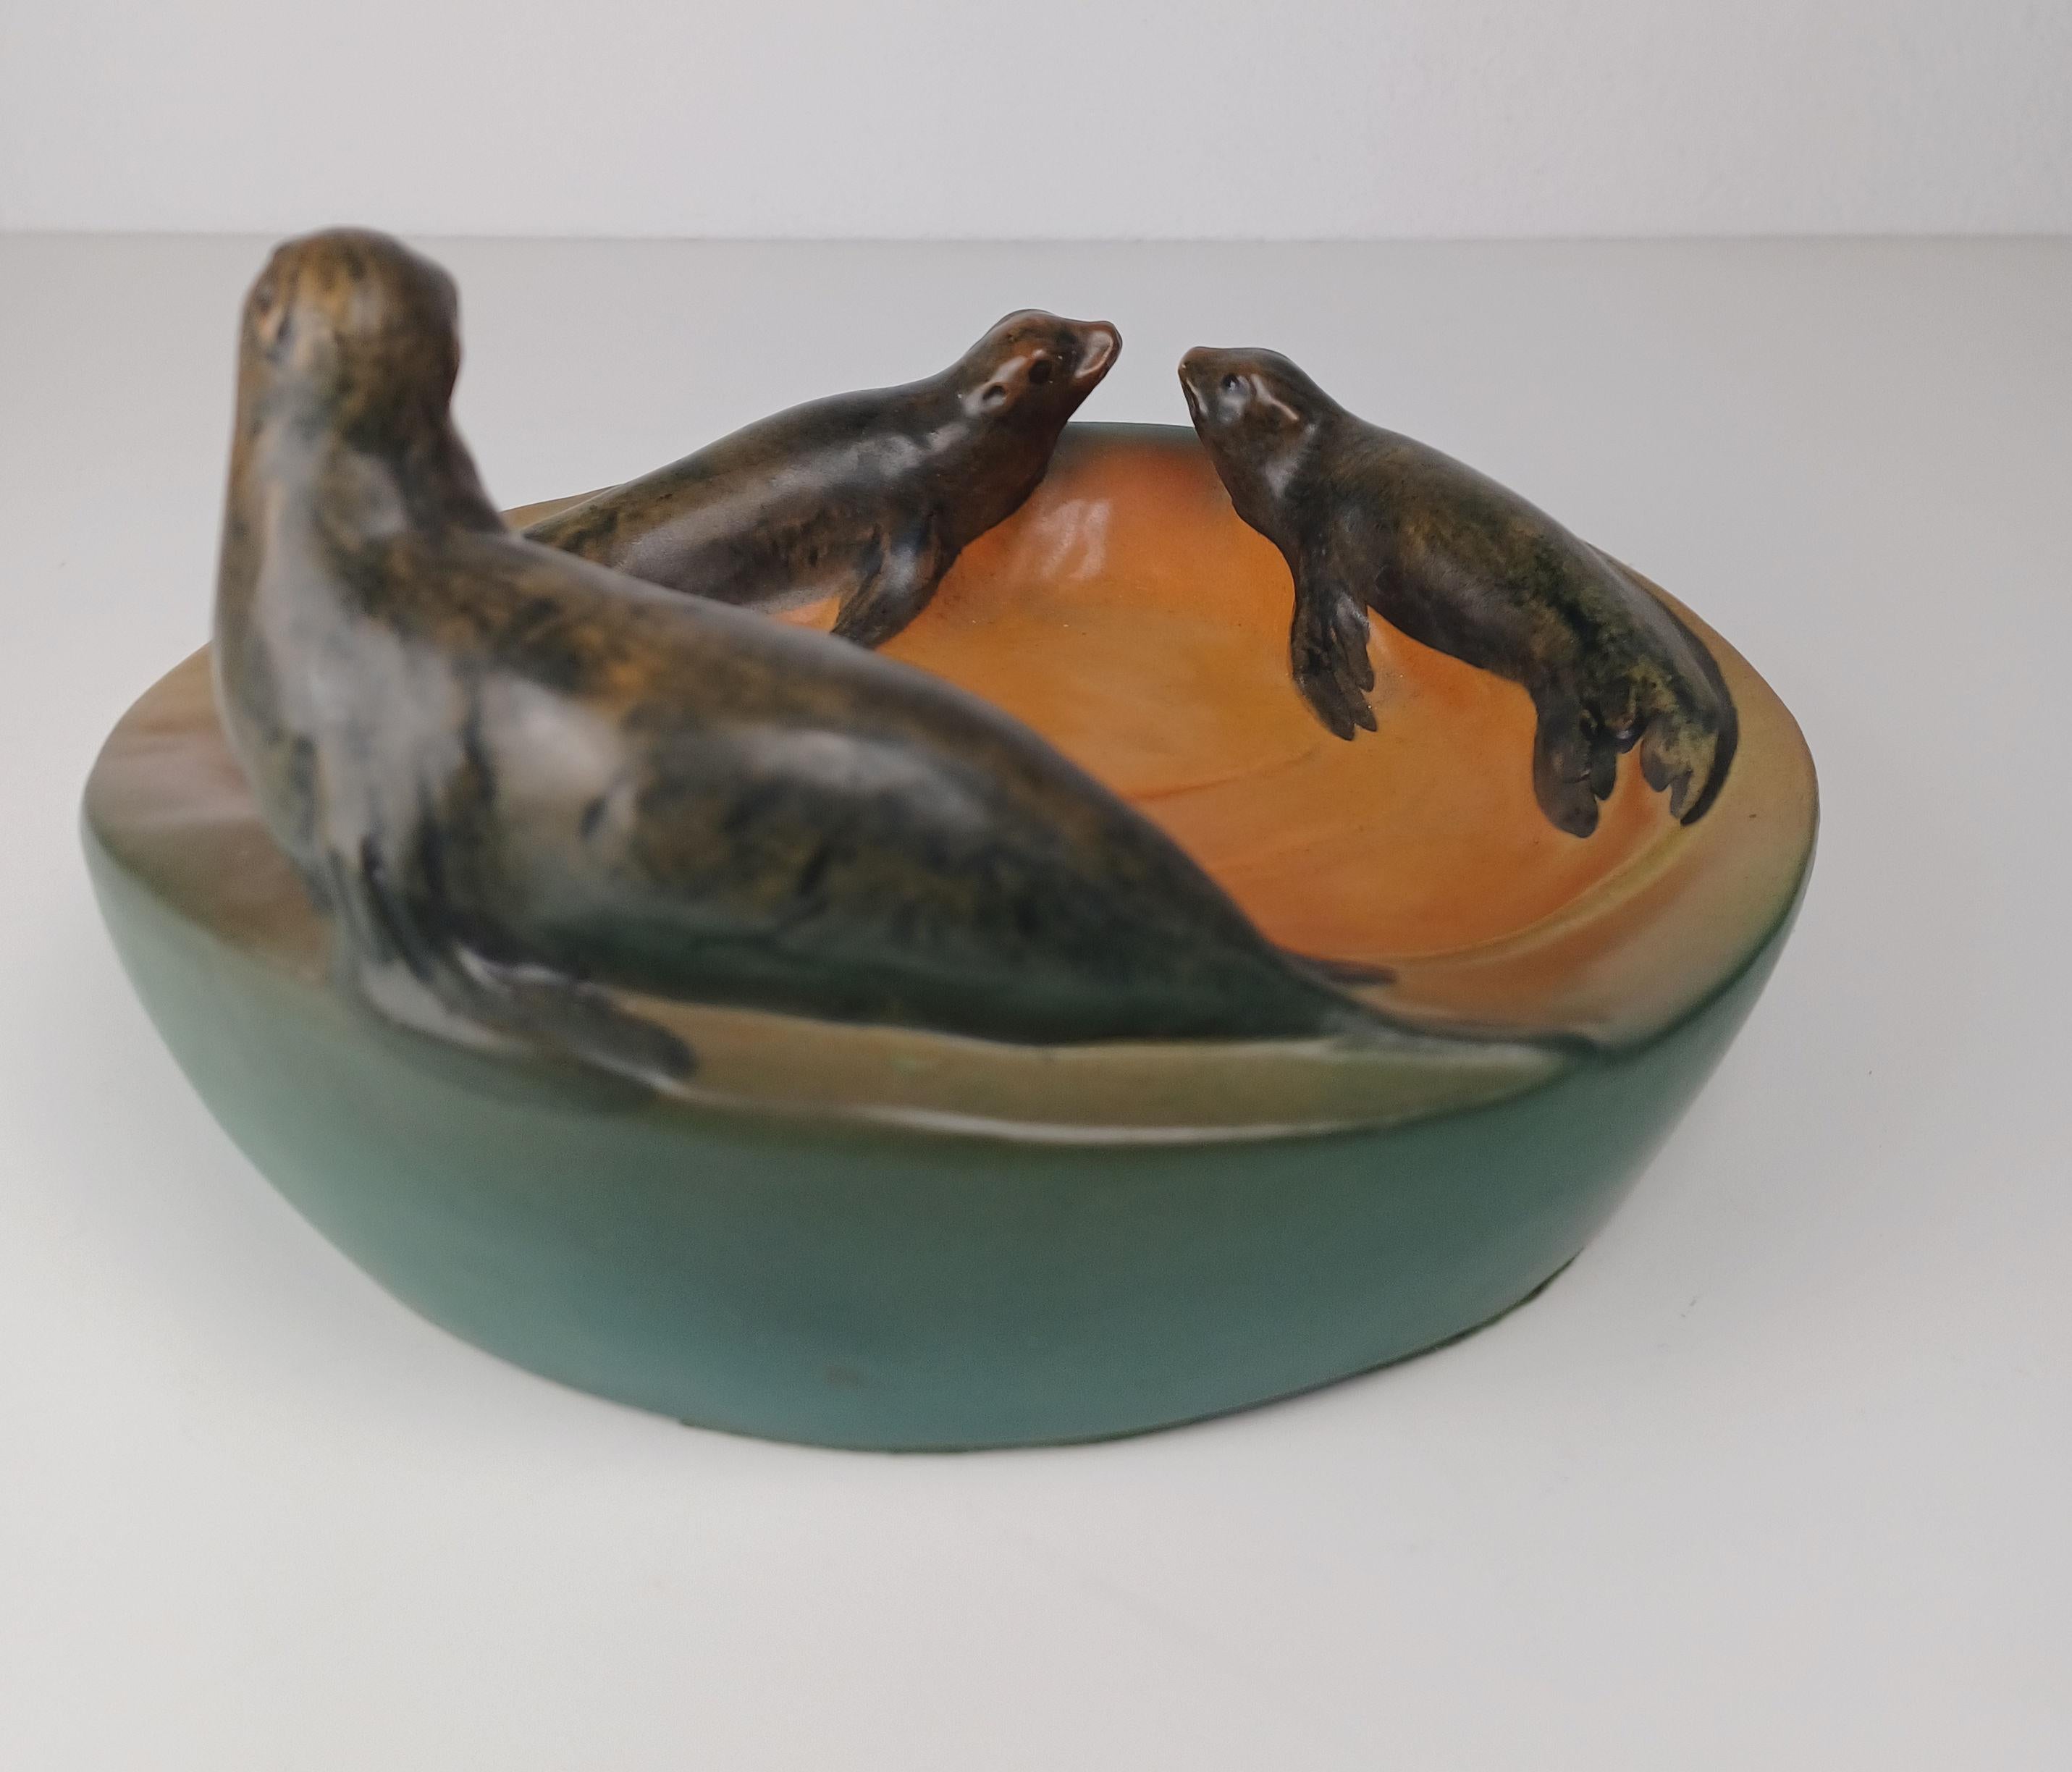 1910's Danish Art Nouveau Handcrafted Sealion Bowl - Ash Tray by P. Ipsens Enke For Sale 1